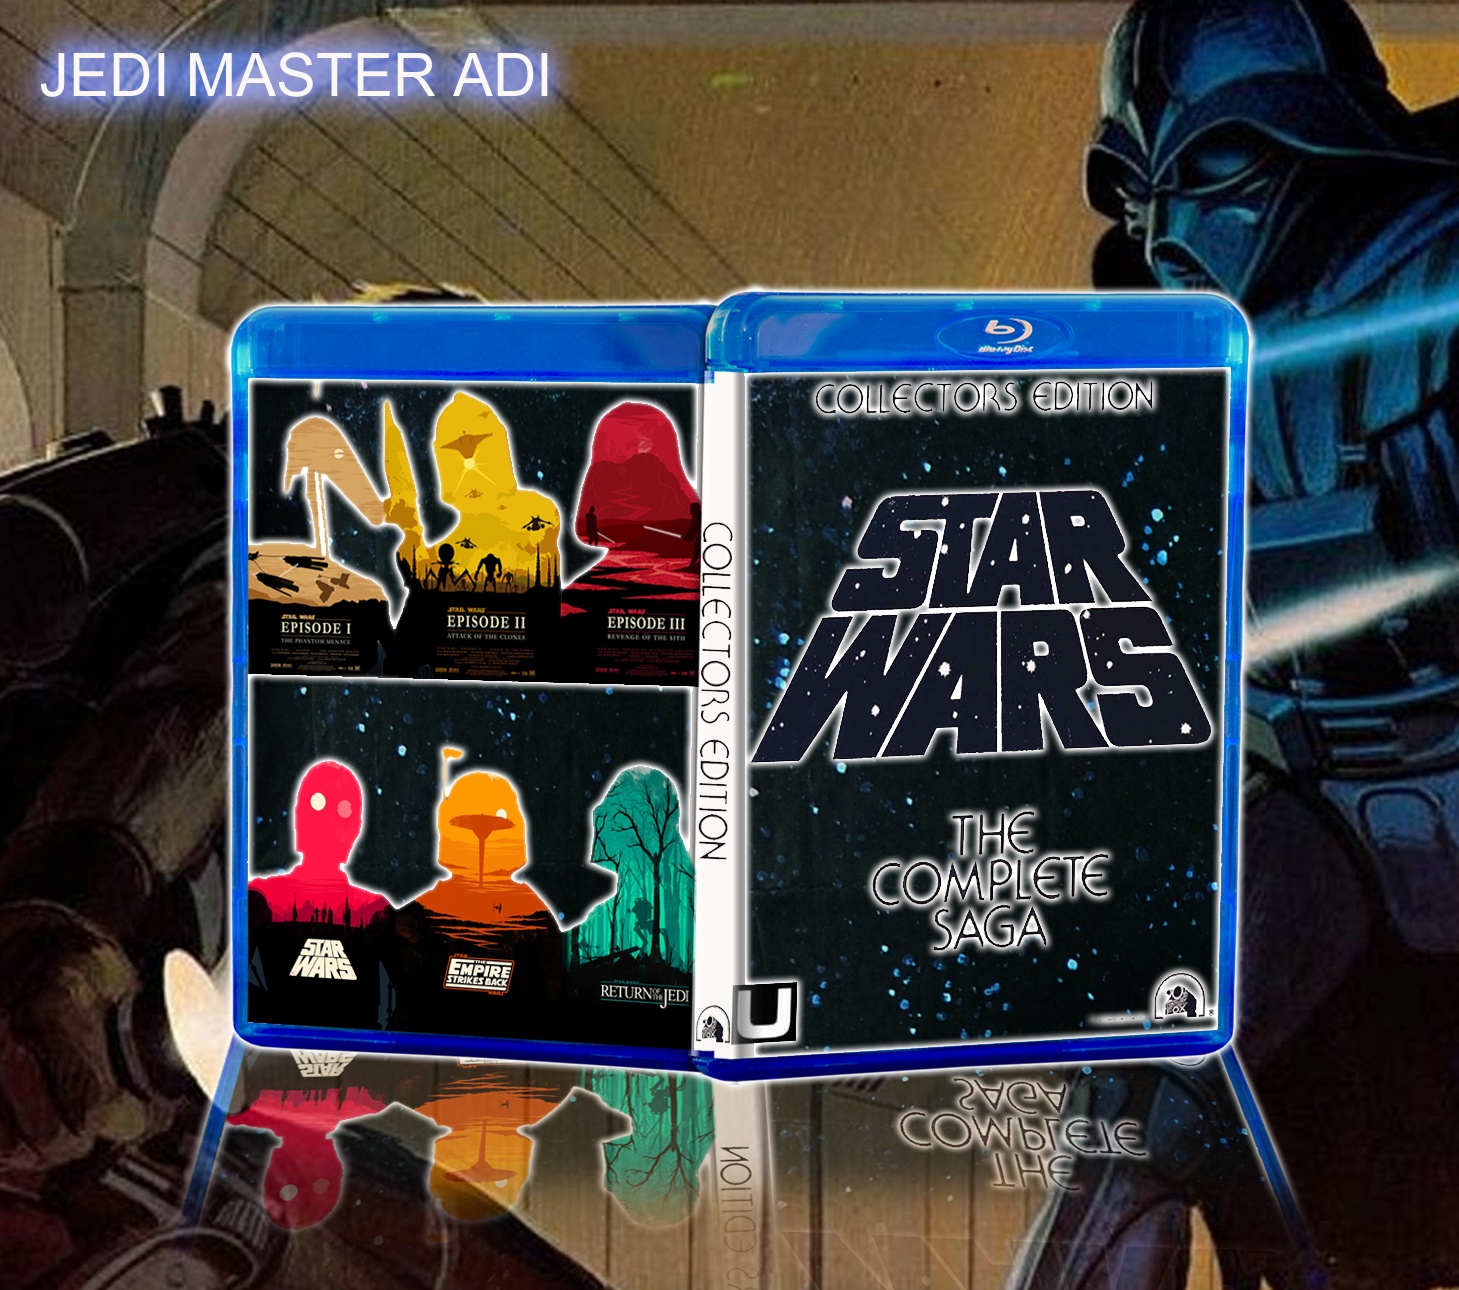 Star Wars Blu Ray Collectors Edition box cover